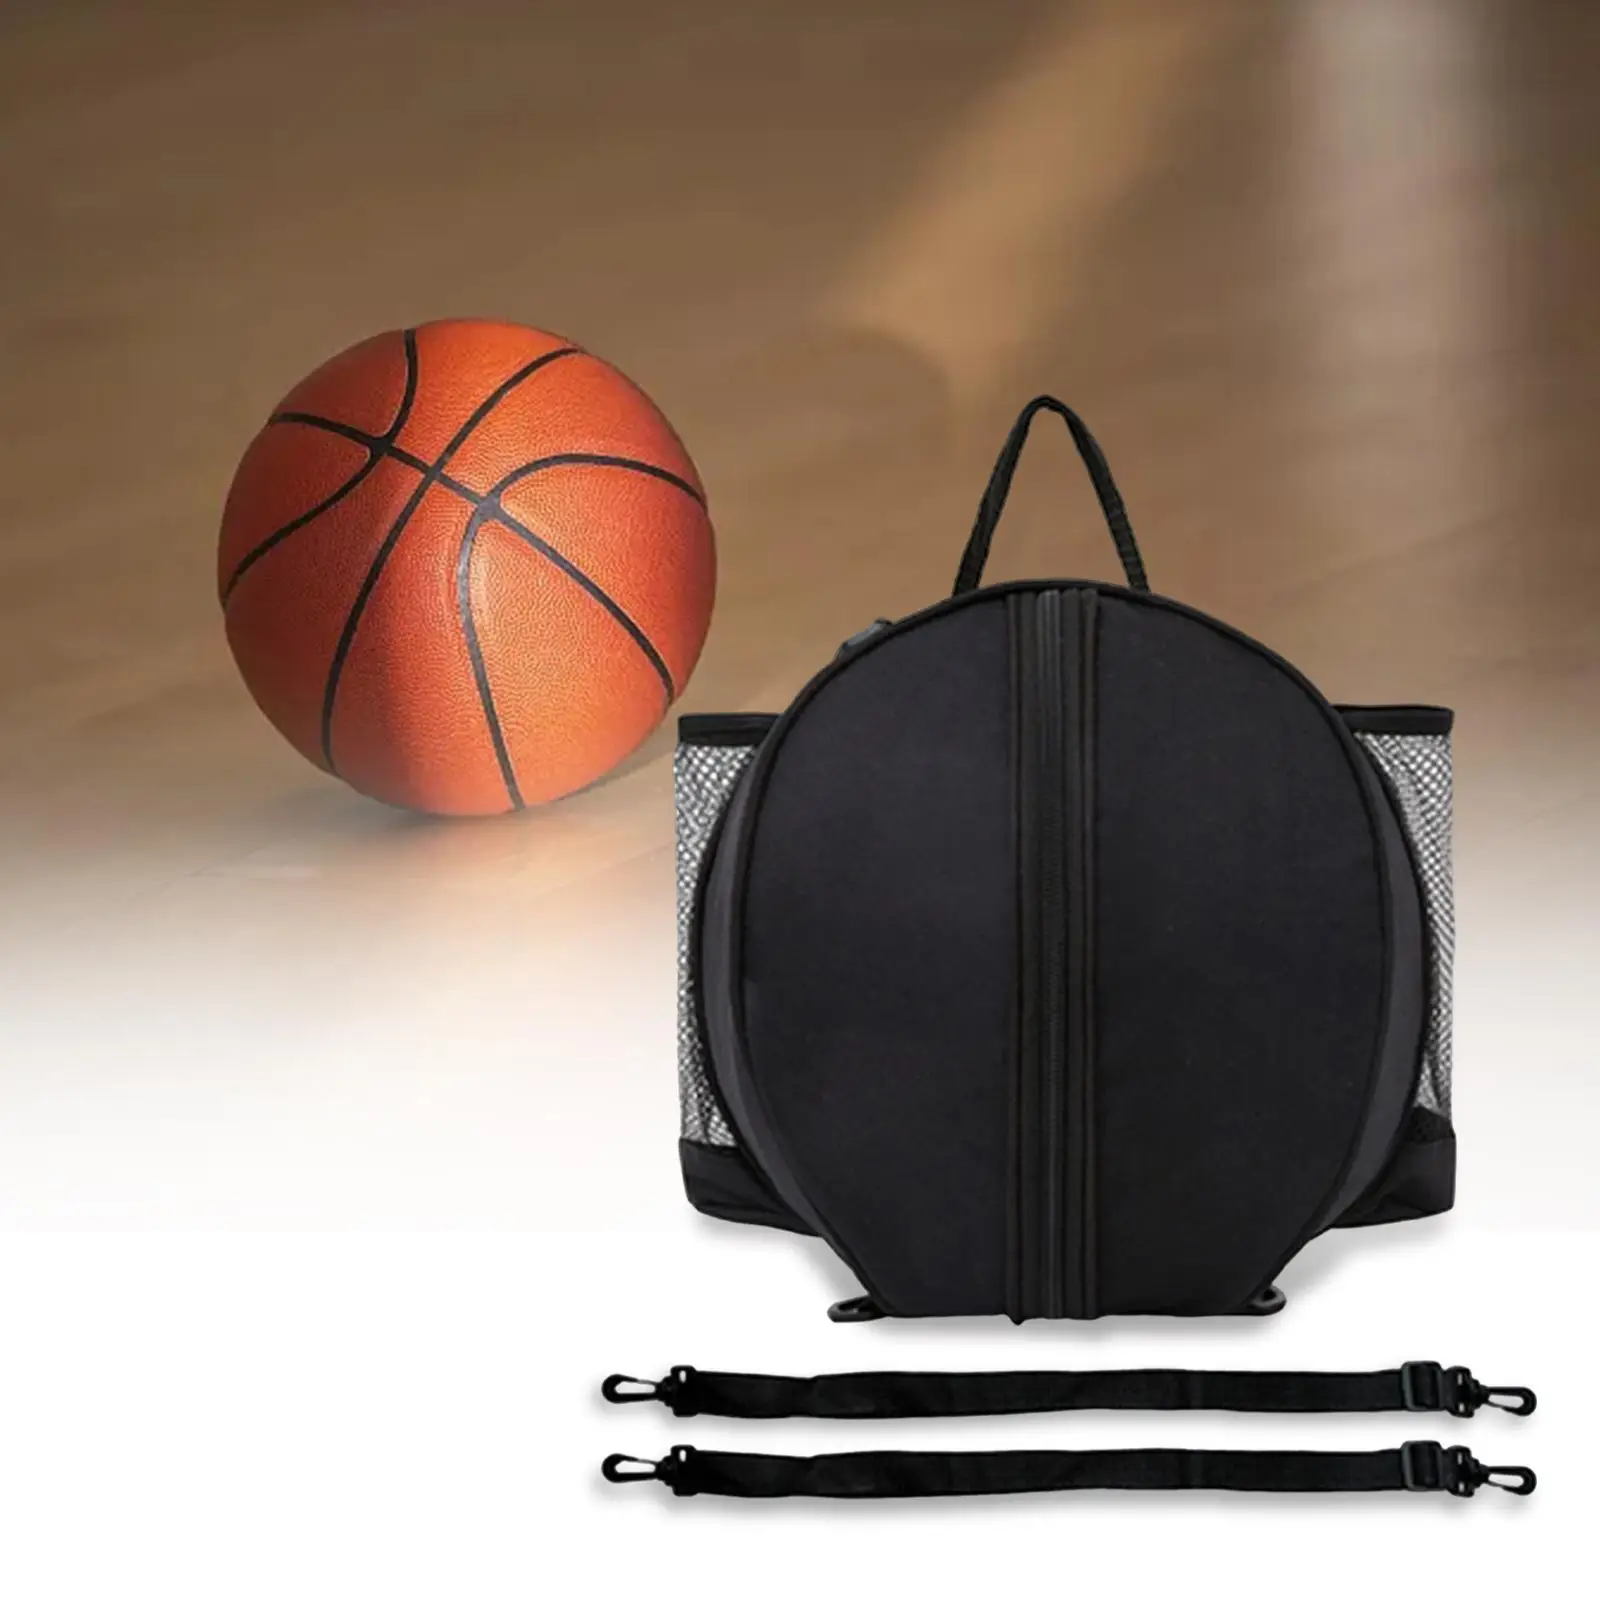 Basketball Shoulder Bag Football Bag Basketball Tote bags wear Resistant